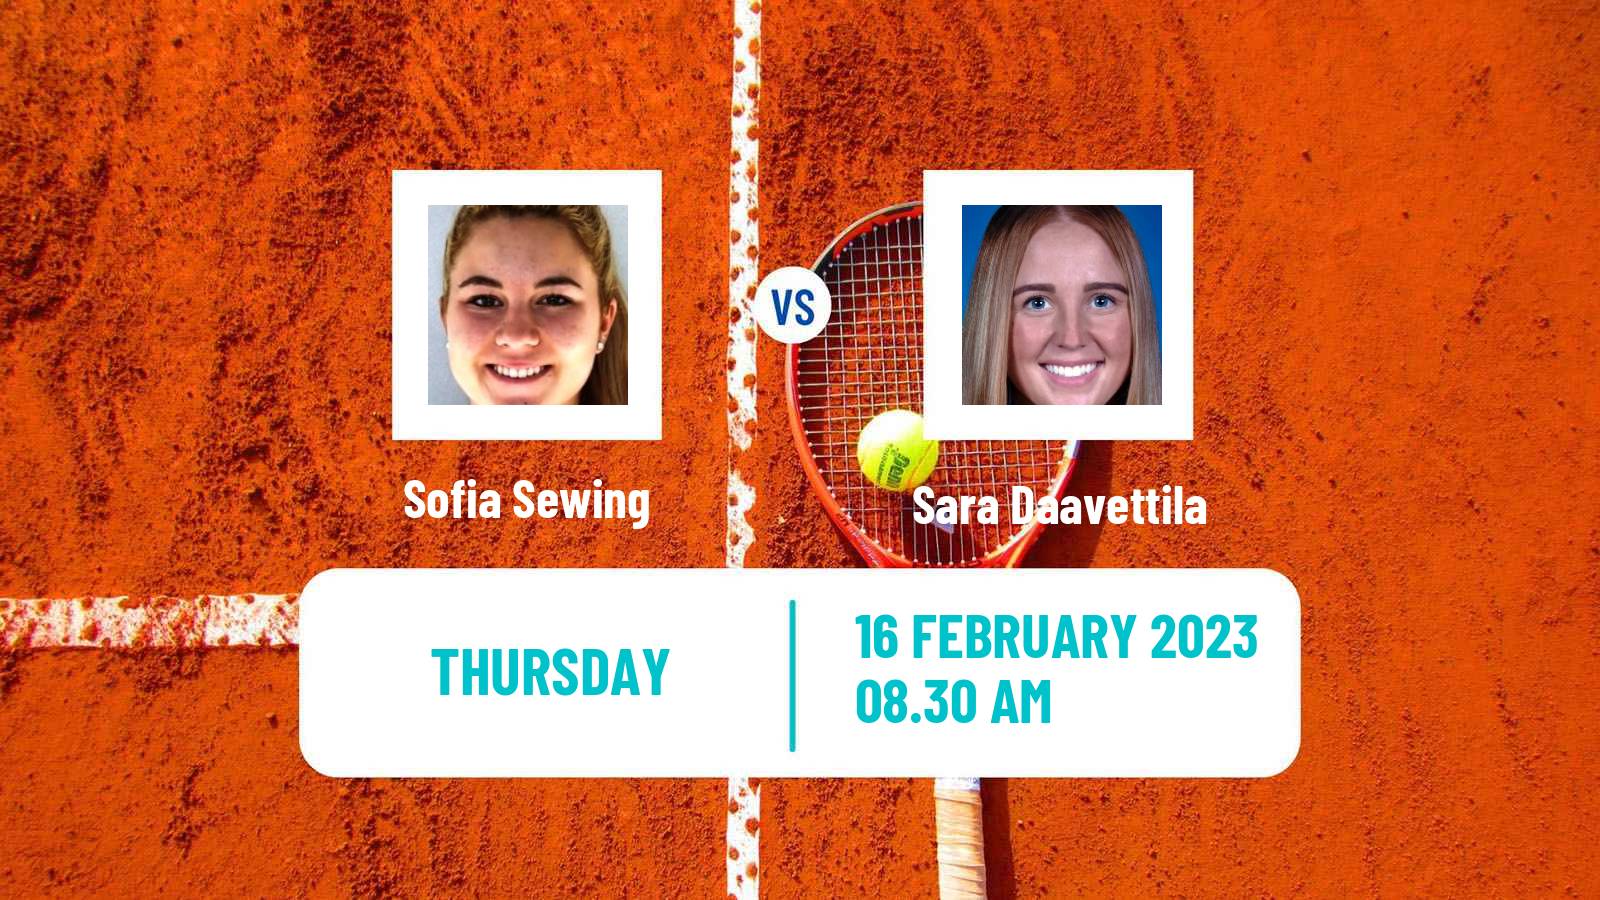 Tennis ITF Tournaments Sofia Sewing - Sara Daavettila